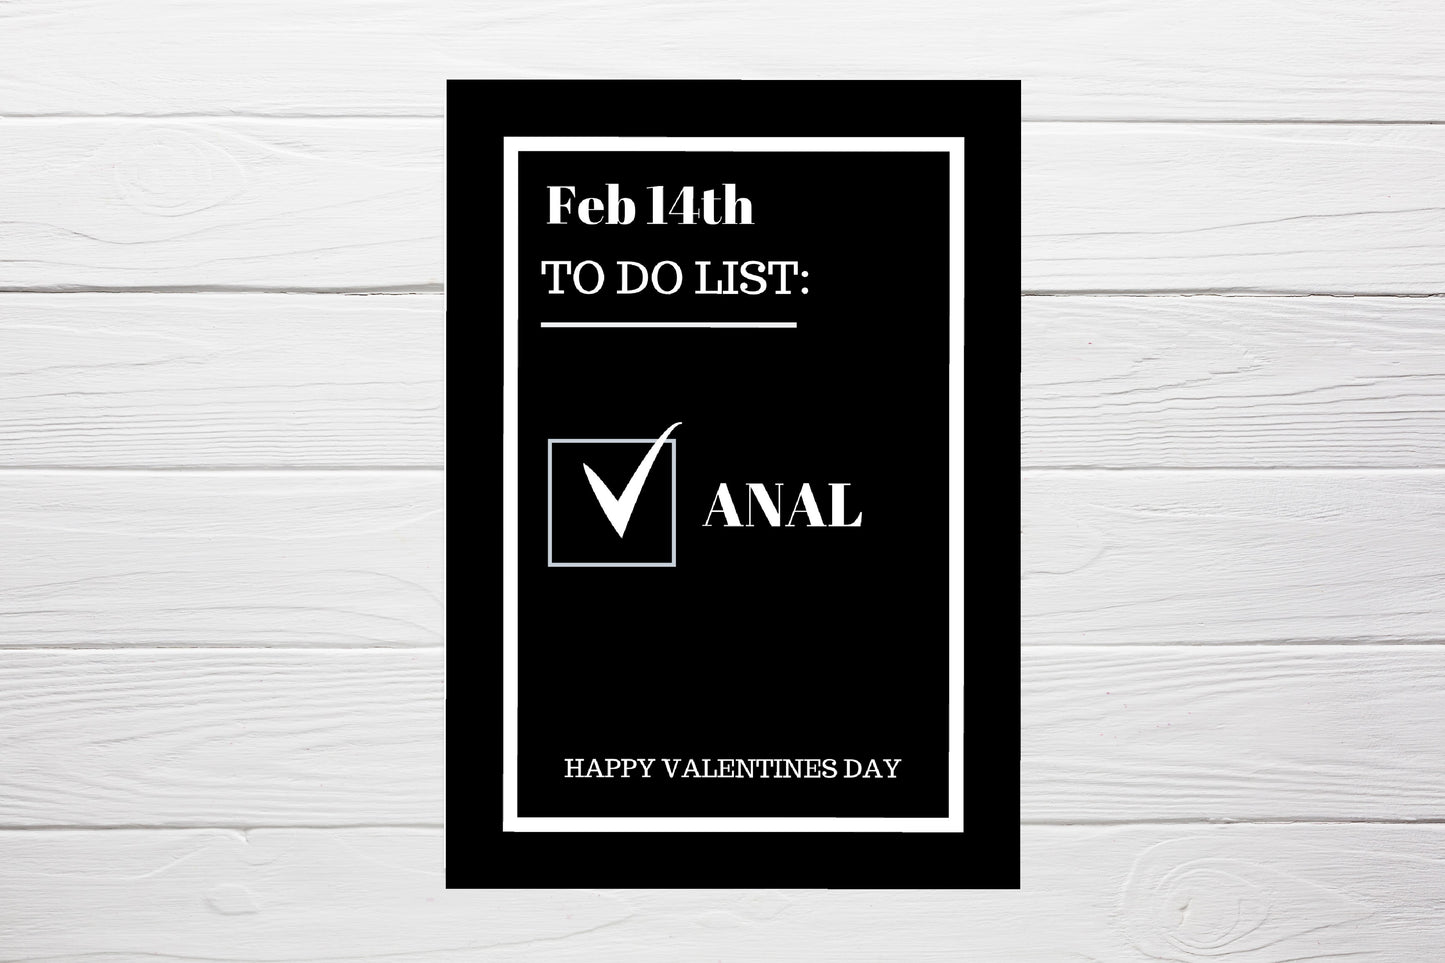 Valentines Card | Feb 14th To Do List - Anal | Funny Card | Joke Card | Rude Card